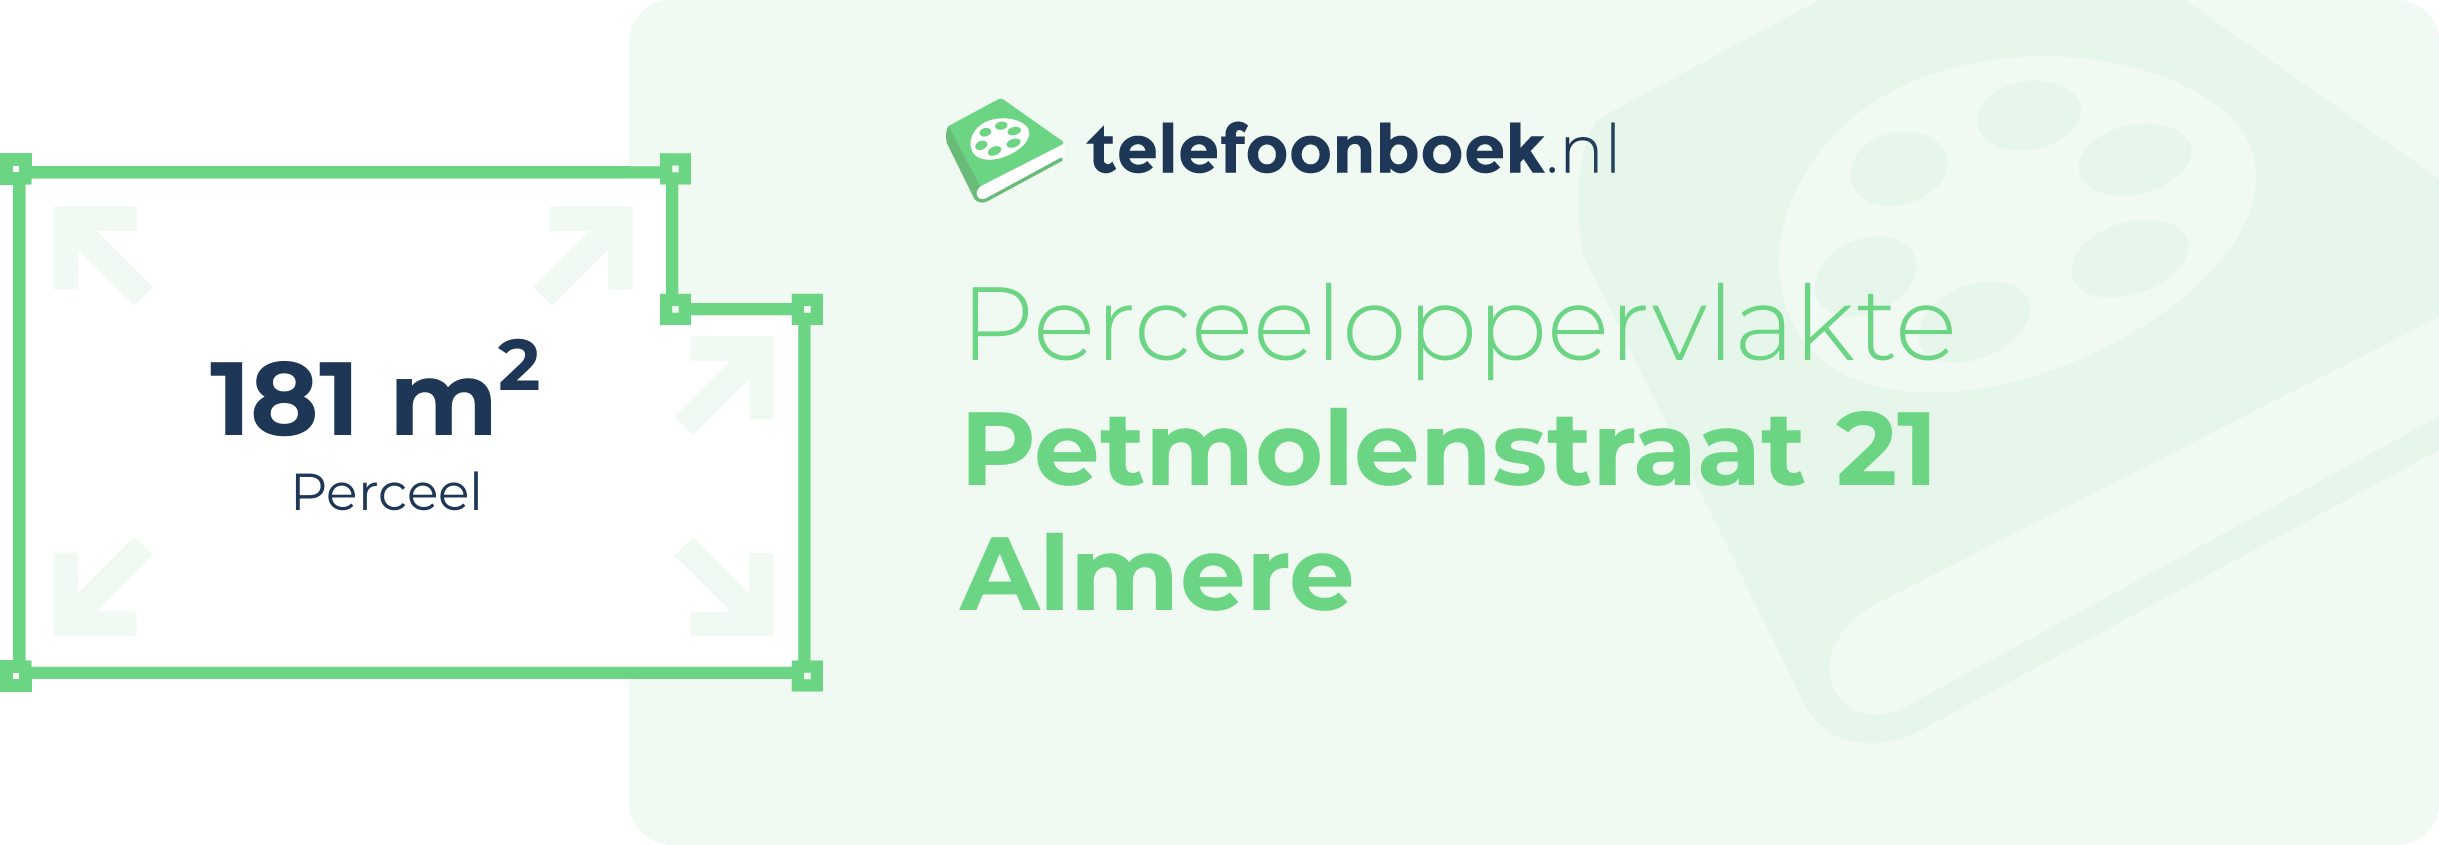 Perceeloppervlakte Petmolenstraat 21 Almere